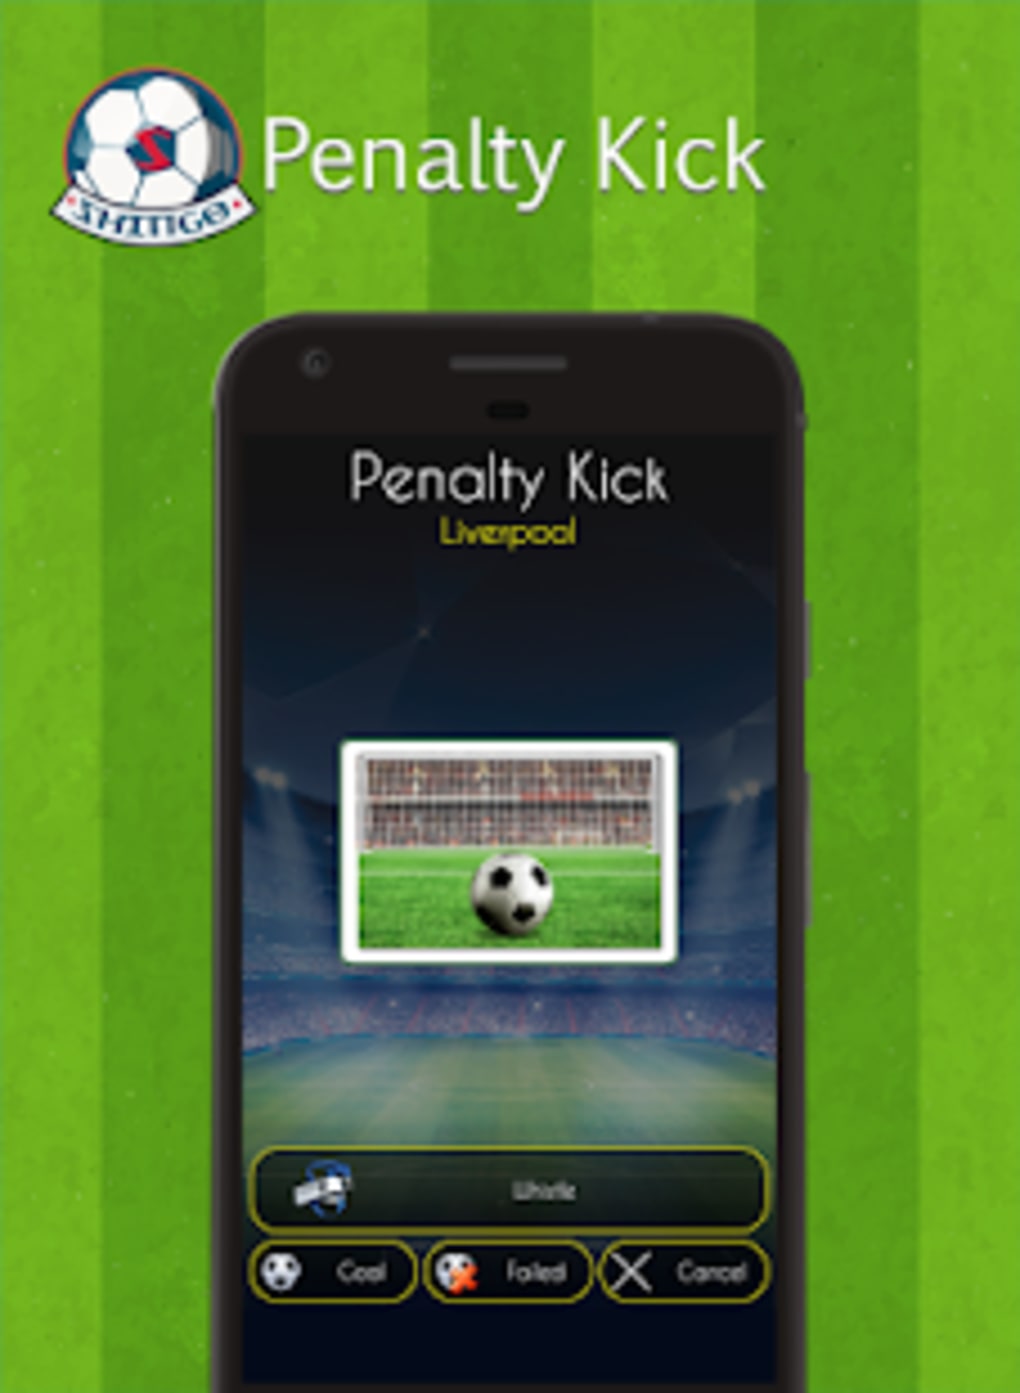 Árbitro do futebol - Shingo – Apps no Google Play